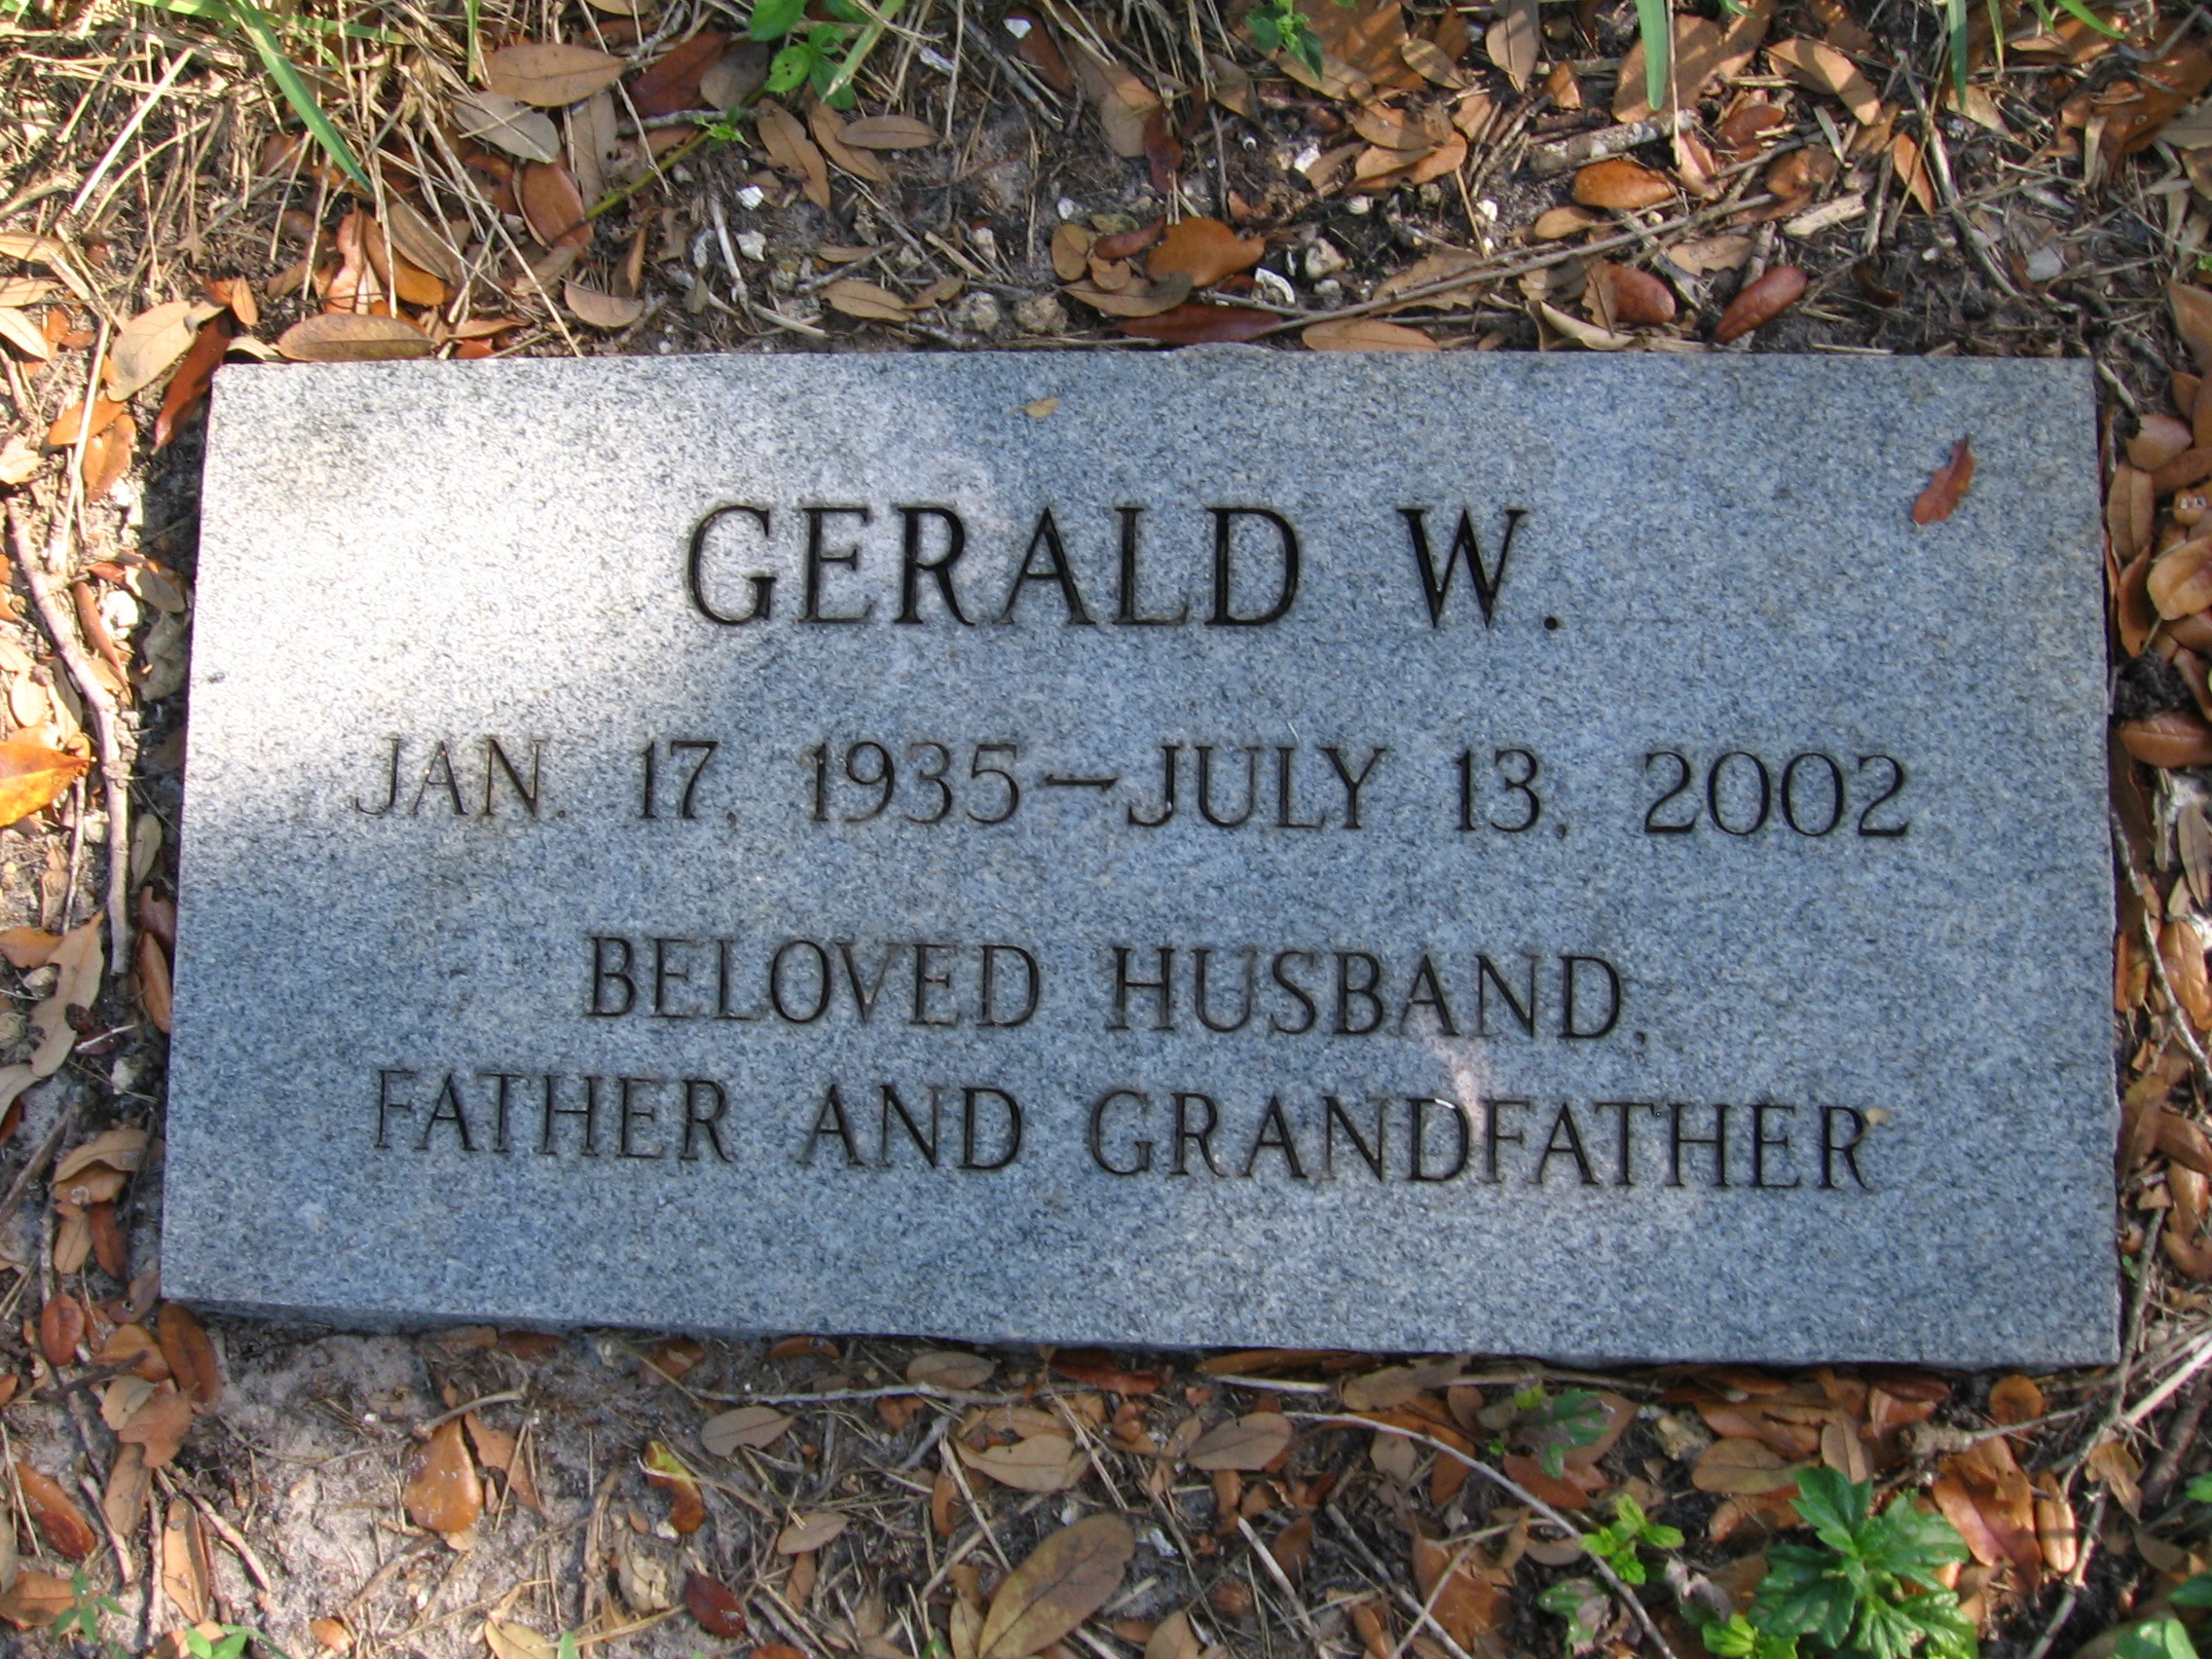 Gerald W Greene